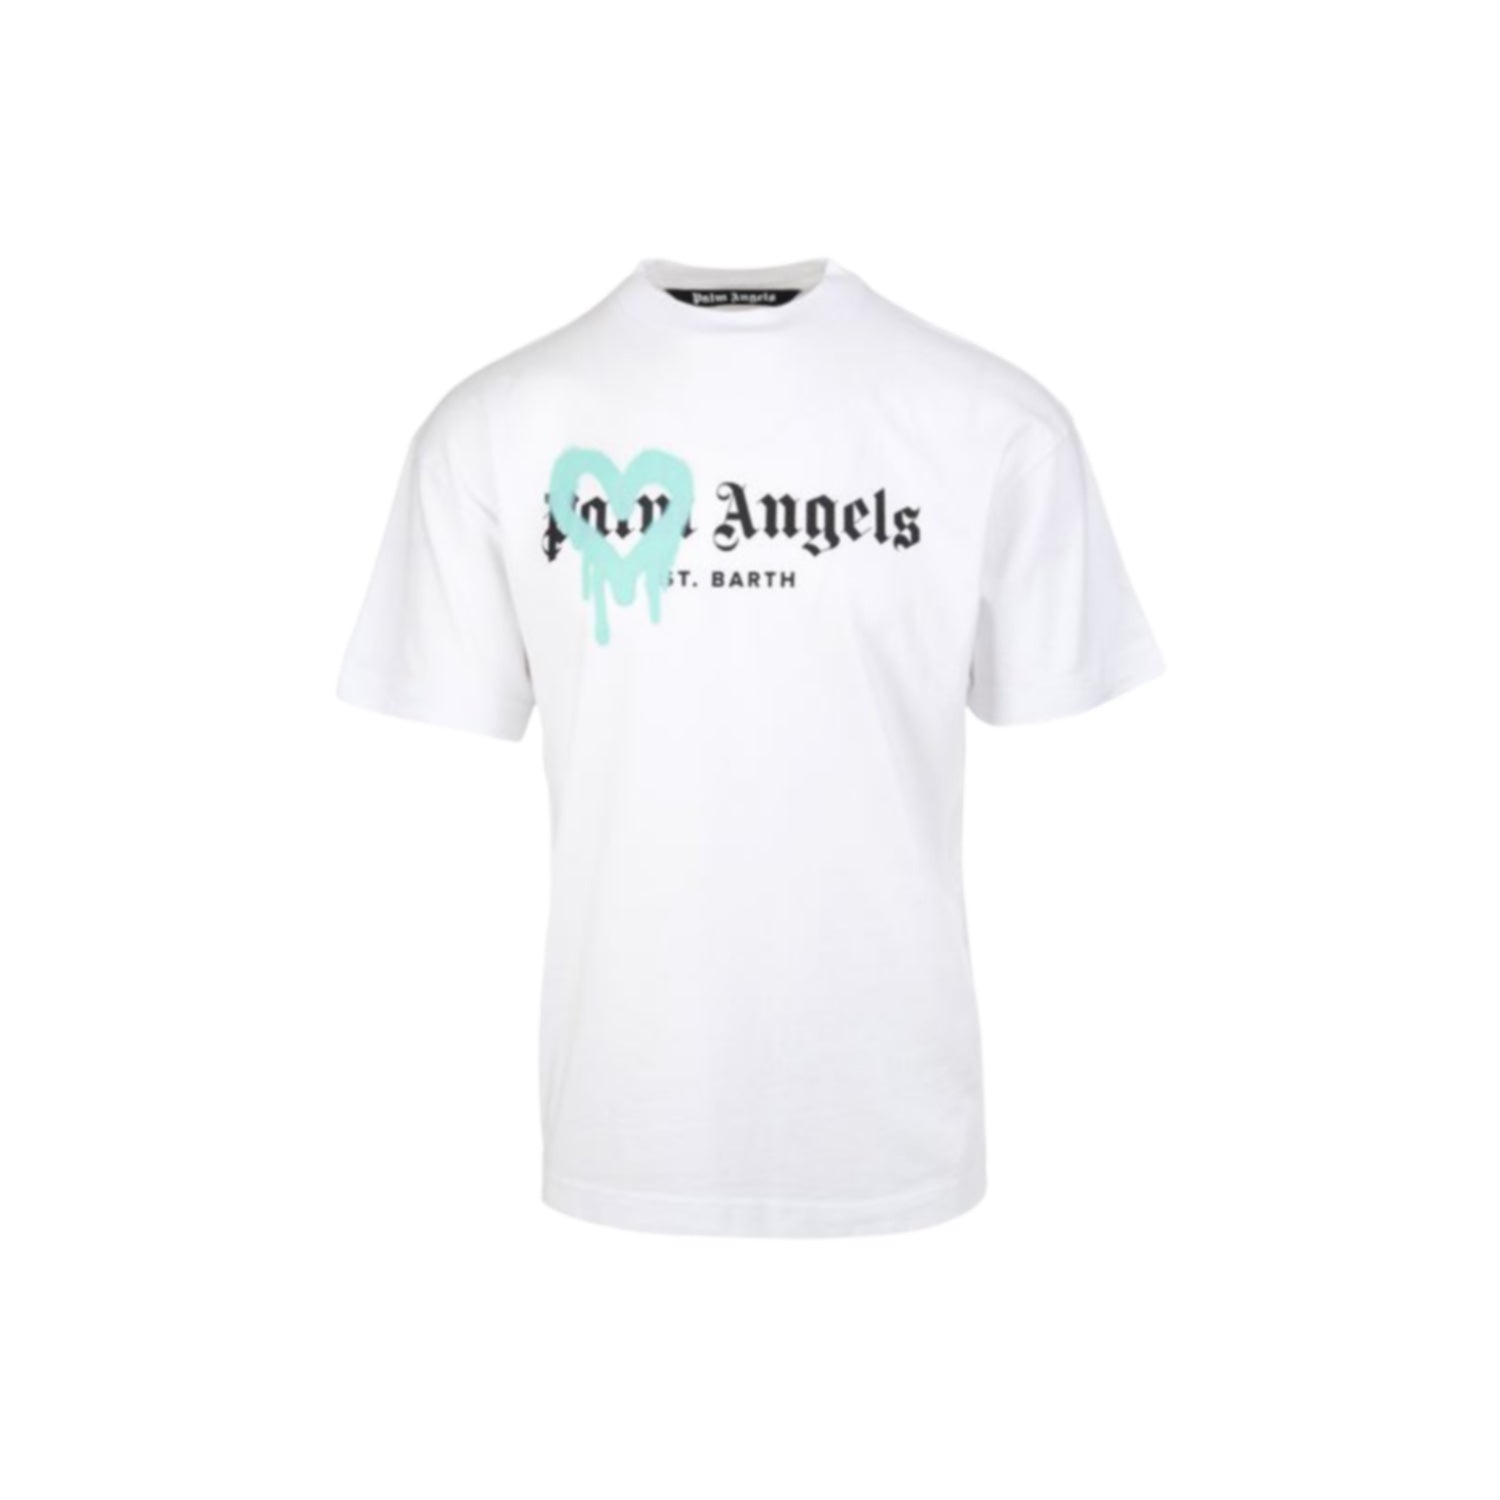 Palm Angels 'St Barth' T-shirt